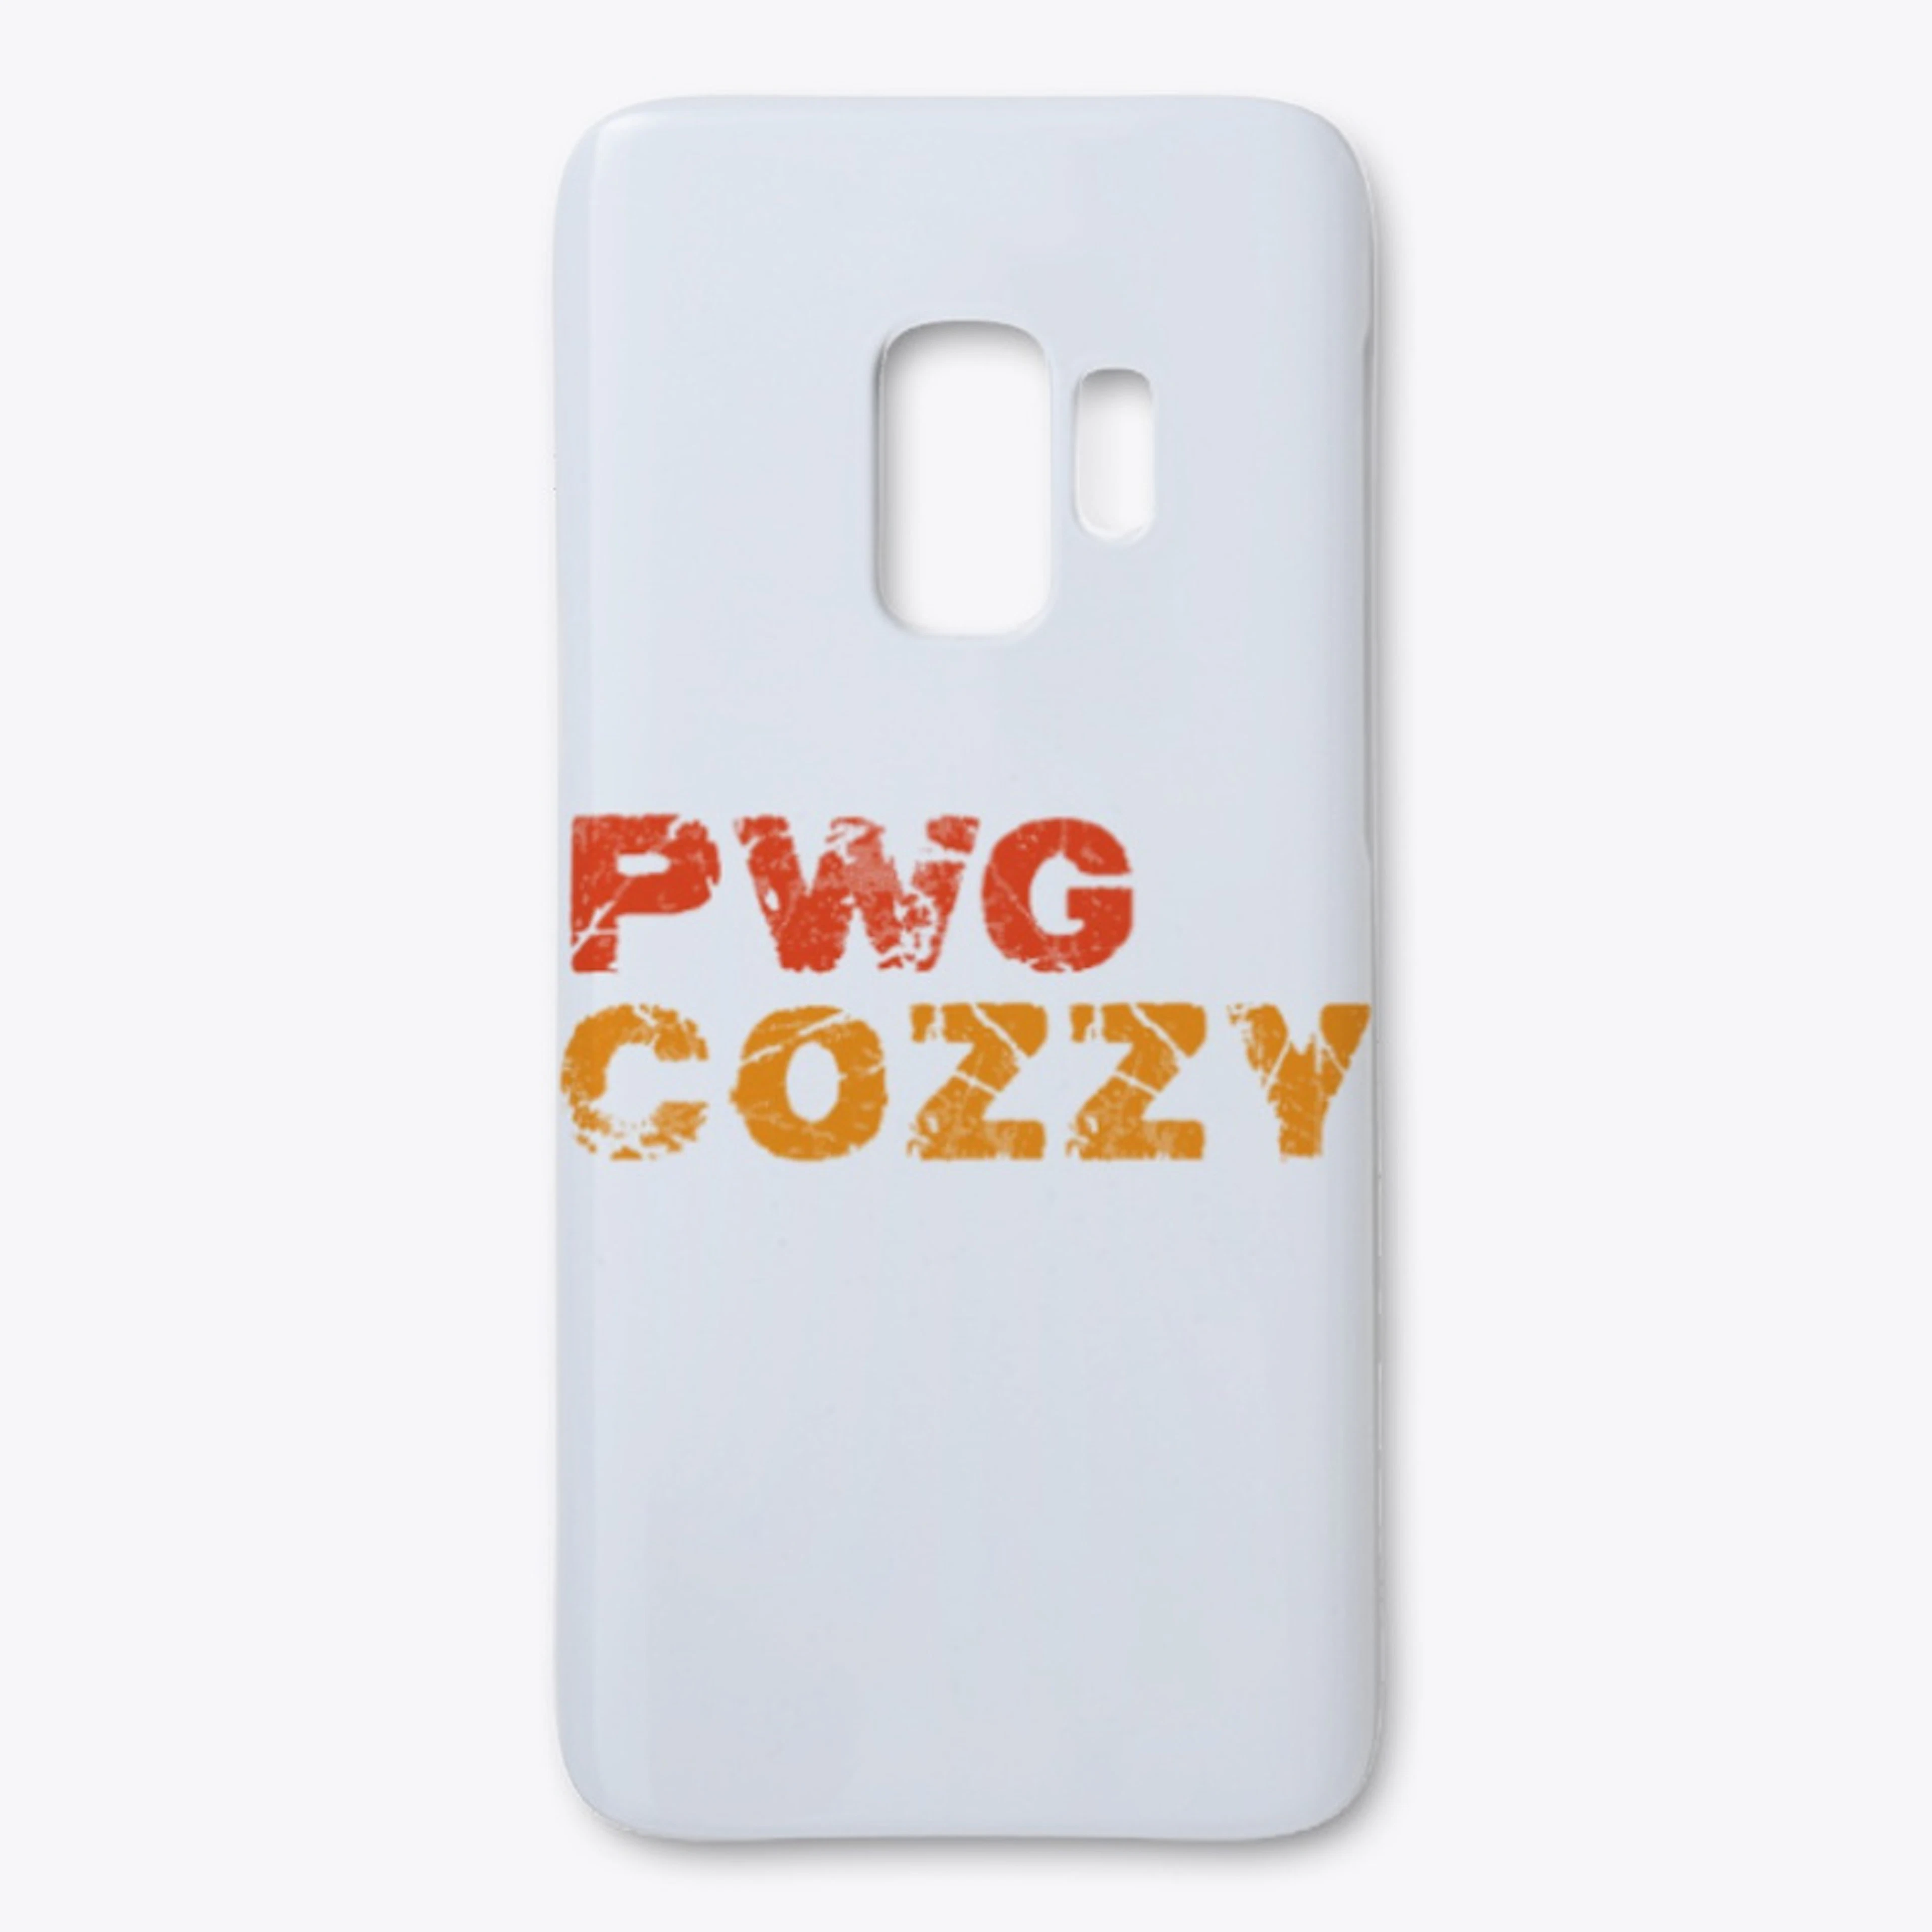 PWG Cozzy samsung case